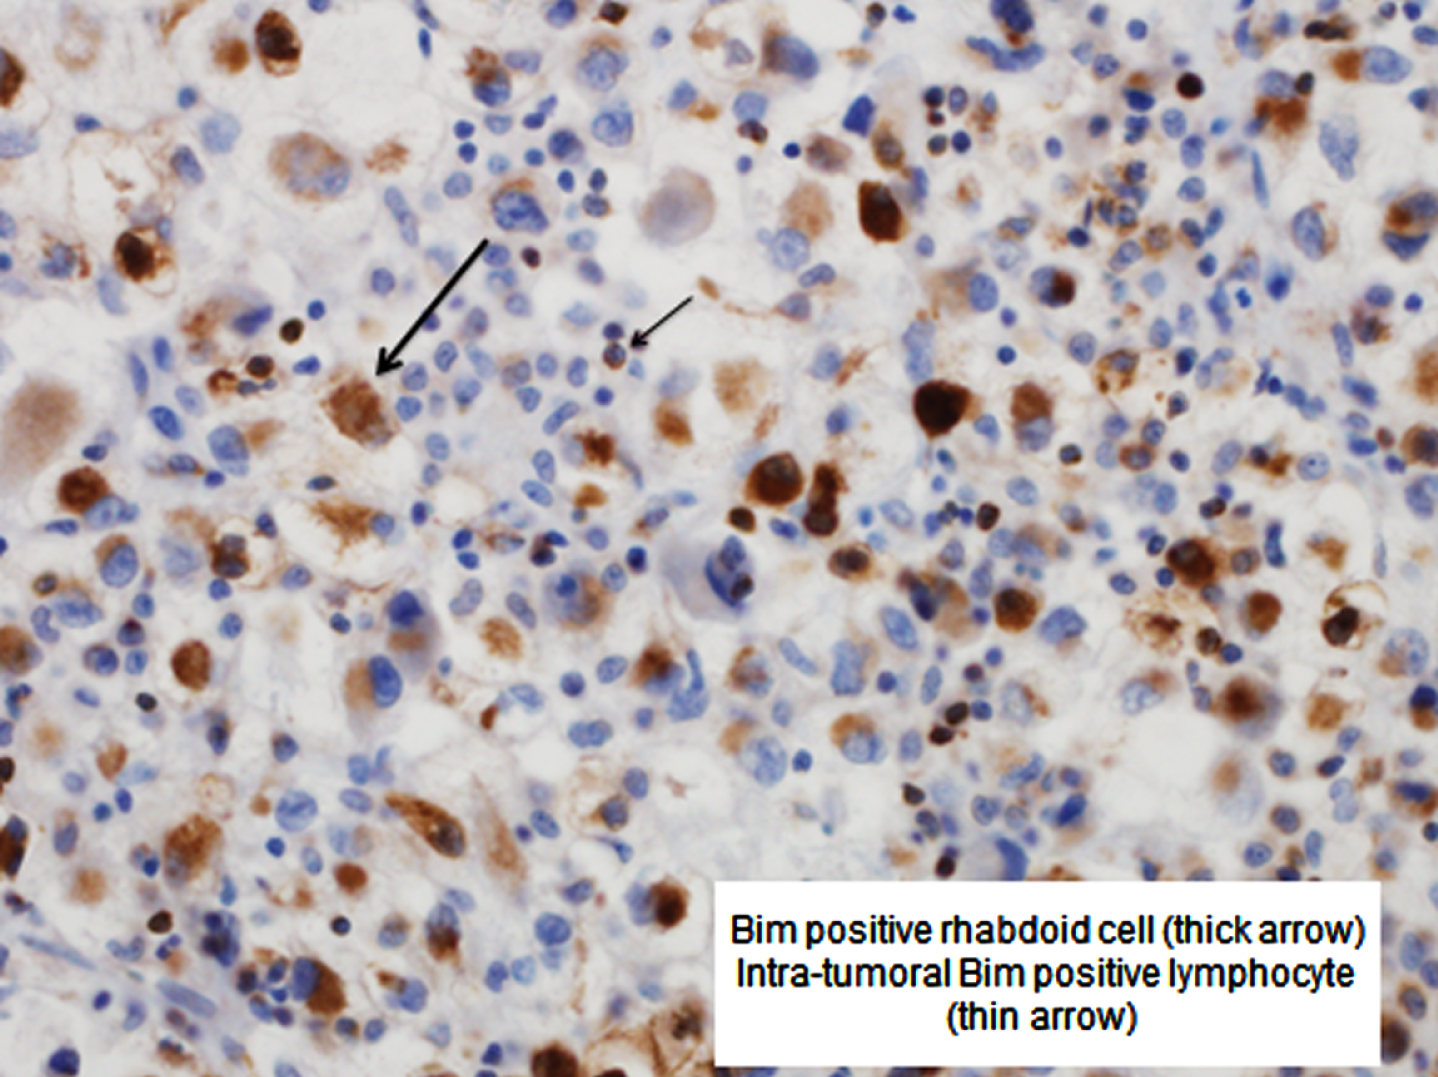 Bim positive rhabdoid cell (thick arrow) and intra-tumoral Bim positive lymphocyte (thin arrow).